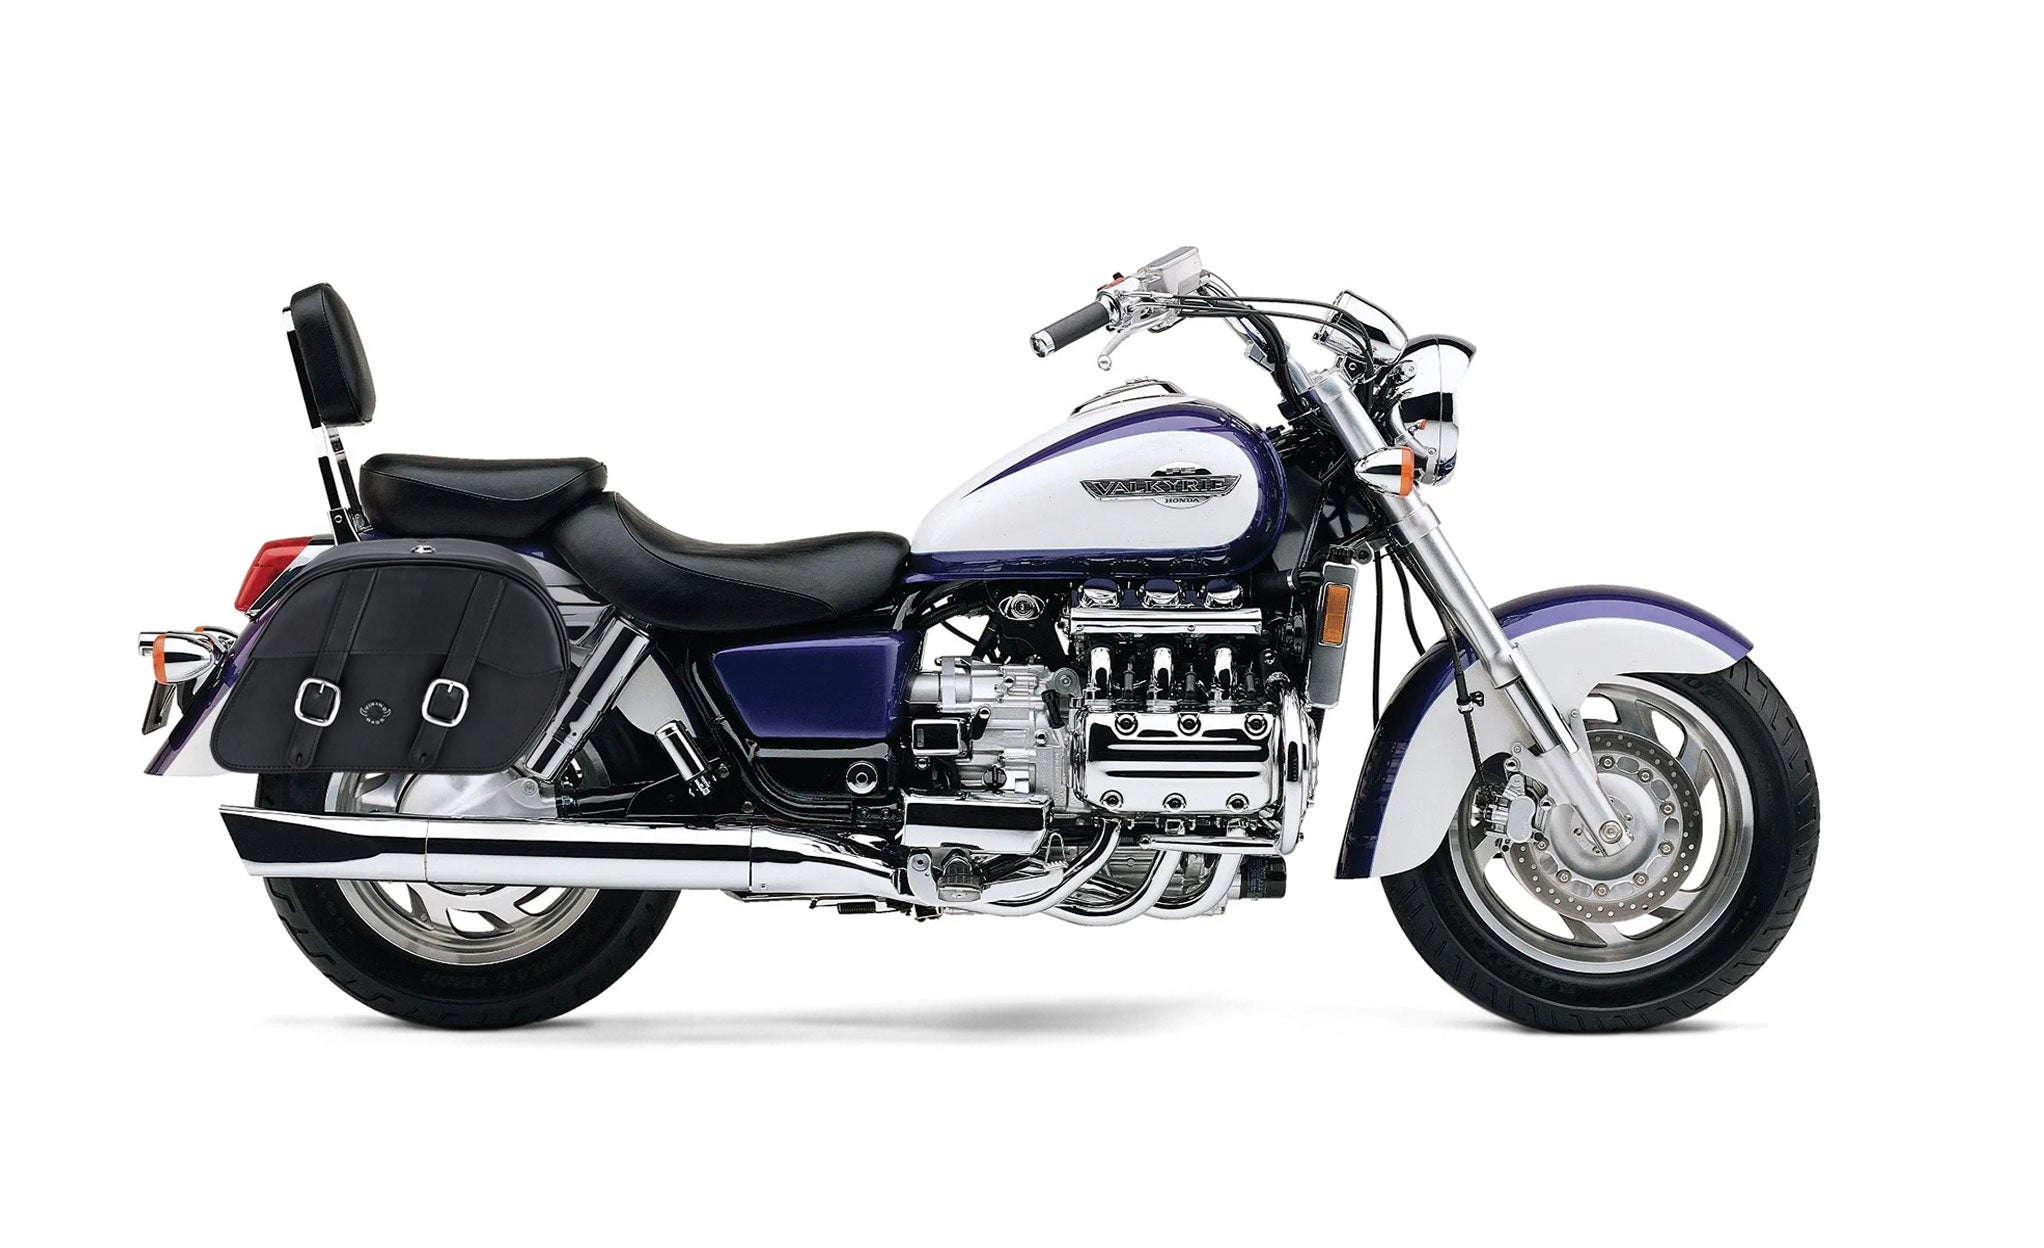 Viking Skarner Large Honda Valkyrie 1500 Interstate Leather Motorcycle Saddlebags on Bike Photo @expand